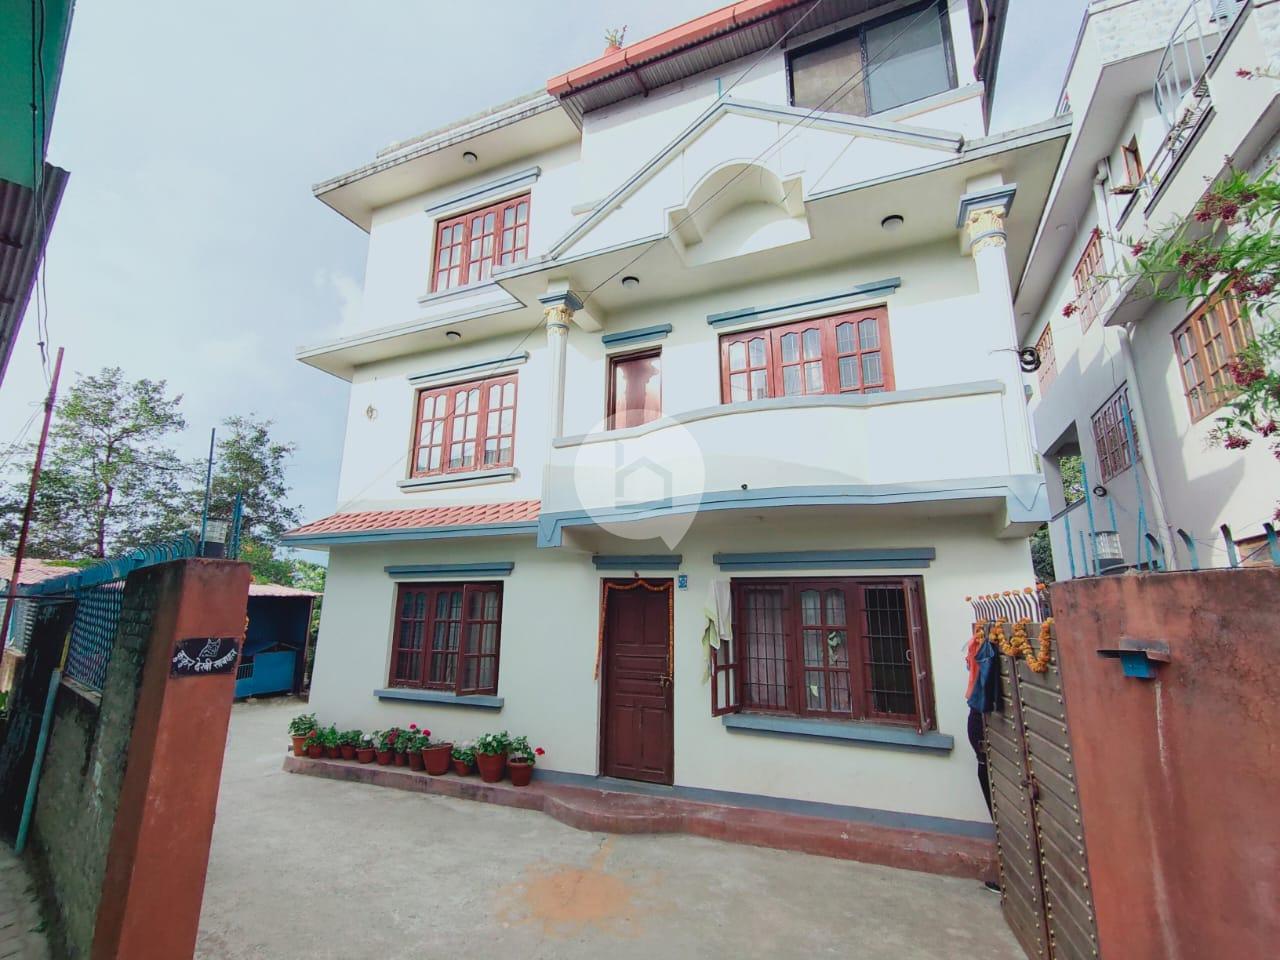 House for sale : House for Sale in Dhapasi, Kathmandu Image 1